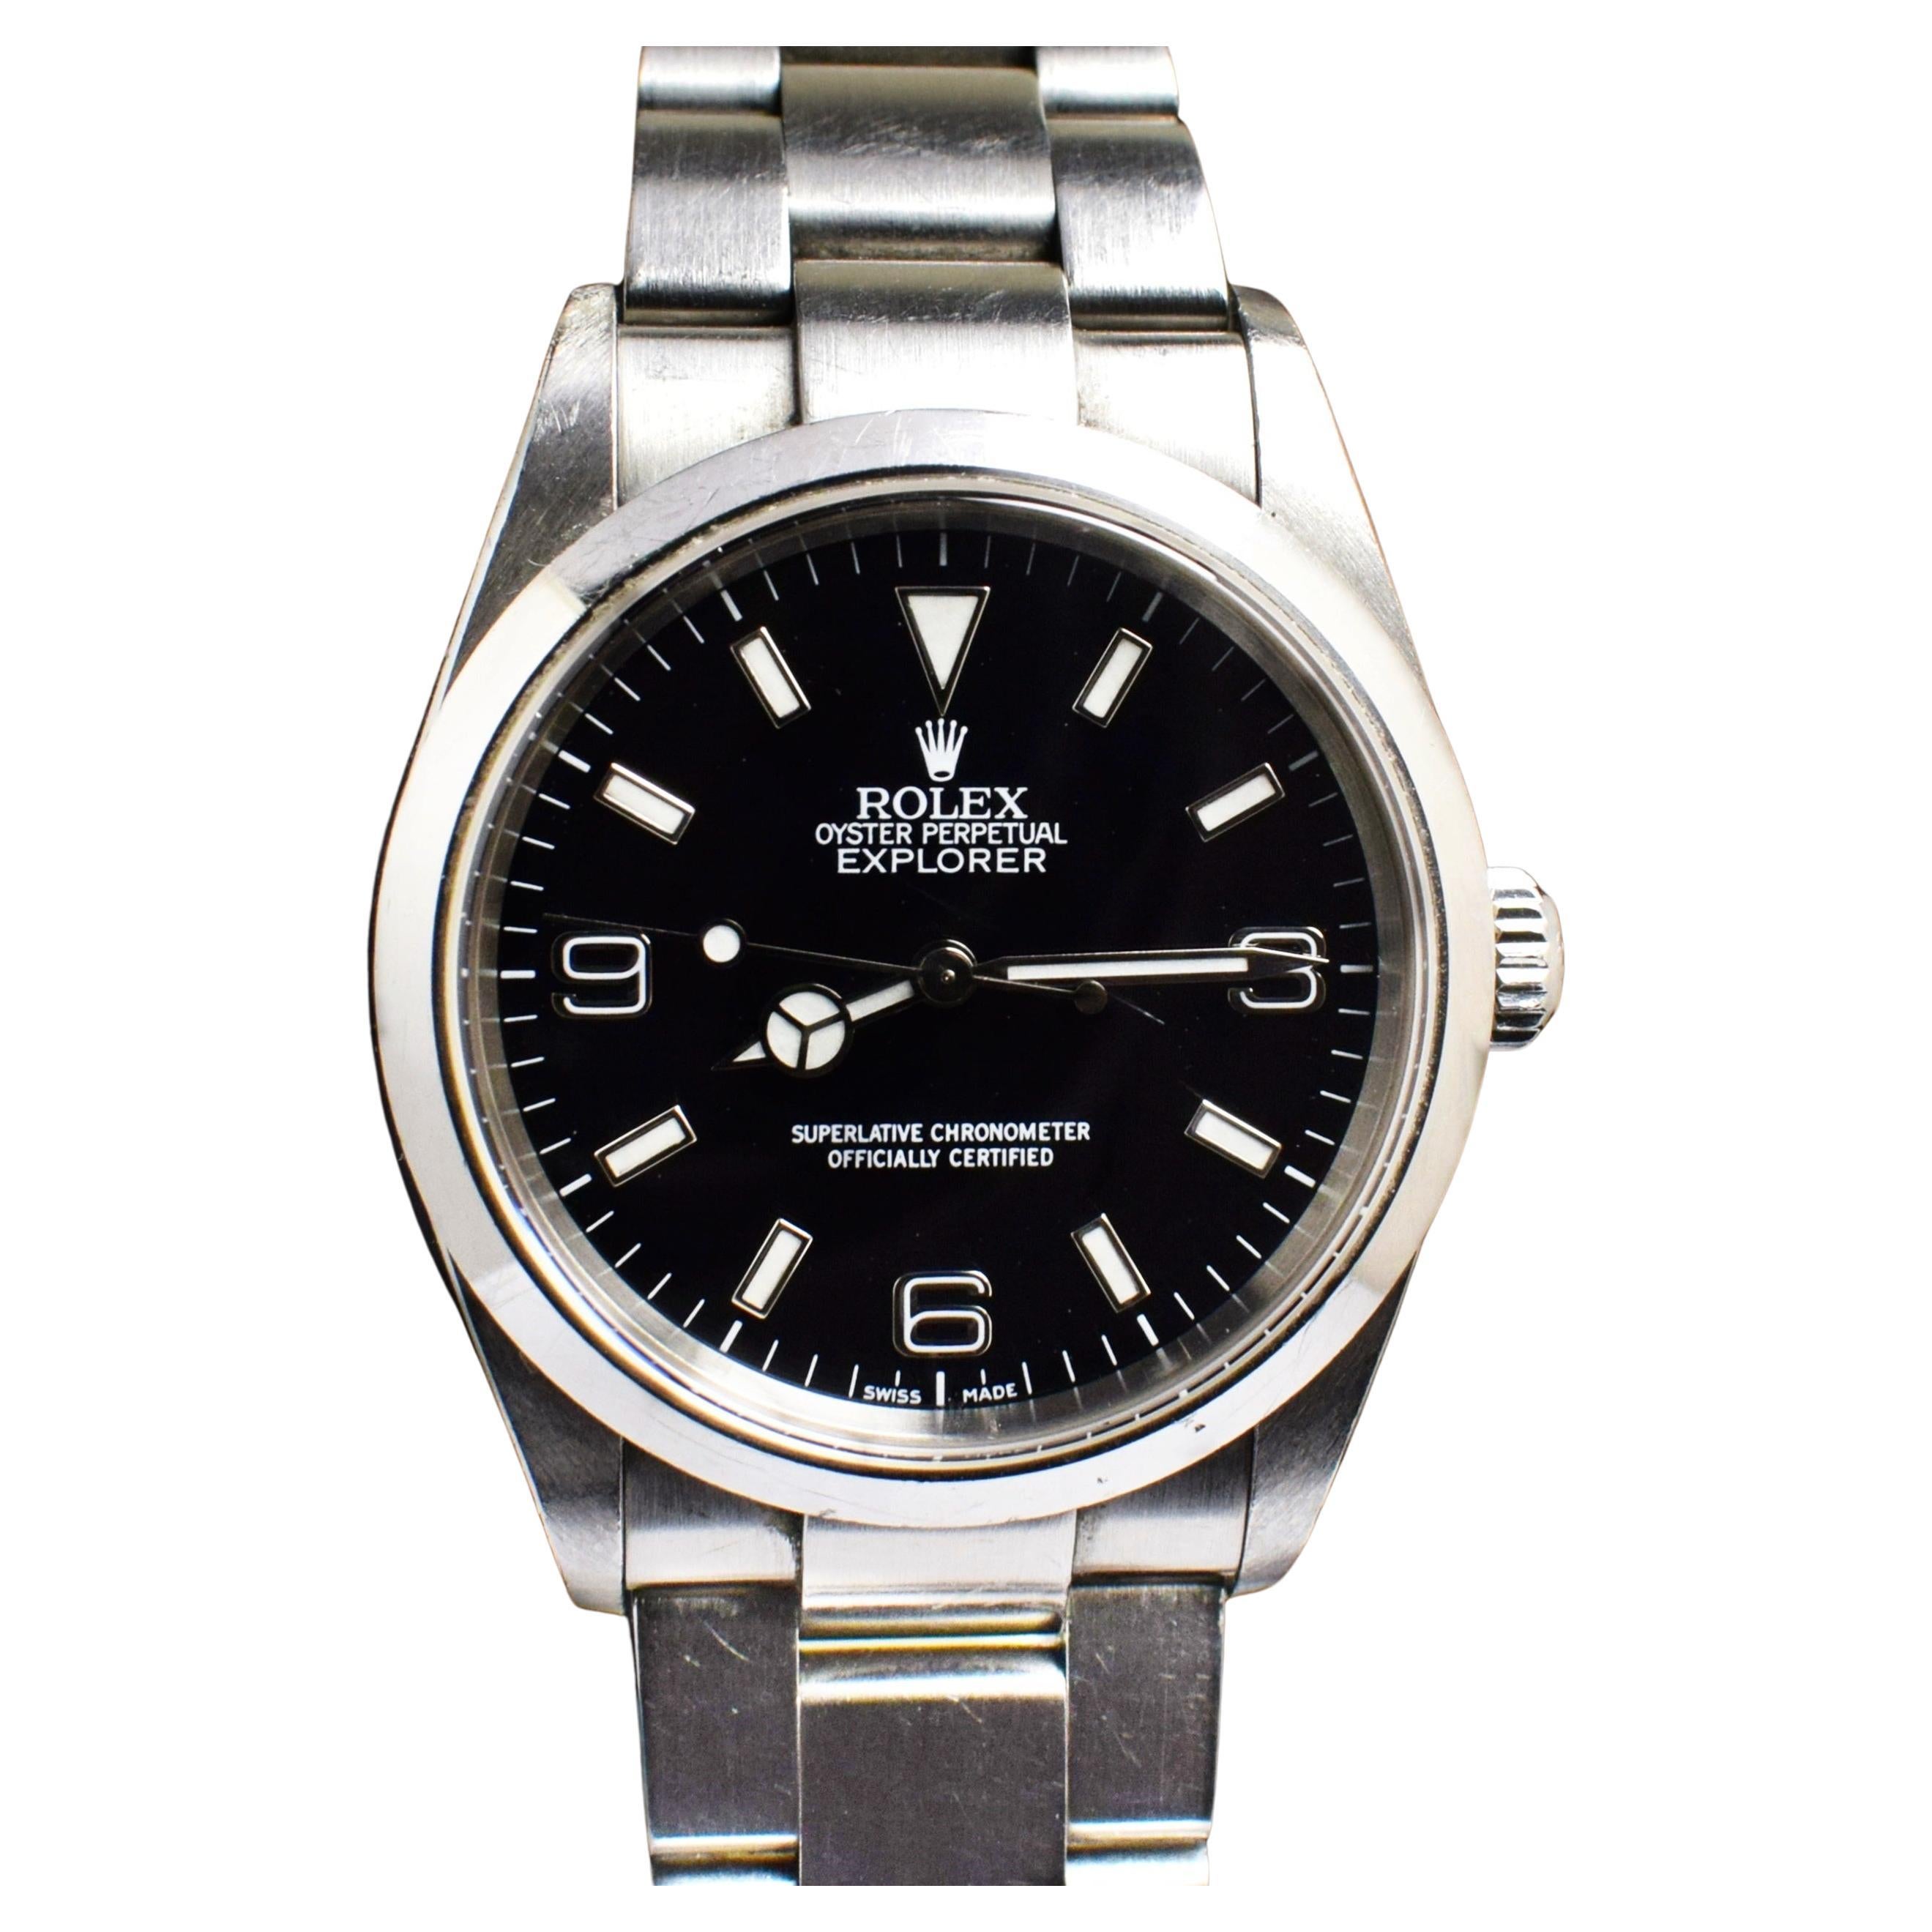 Rolex Explorer I Unpolished Case 36mm 114270 Steel Watch Box & Paper 2002